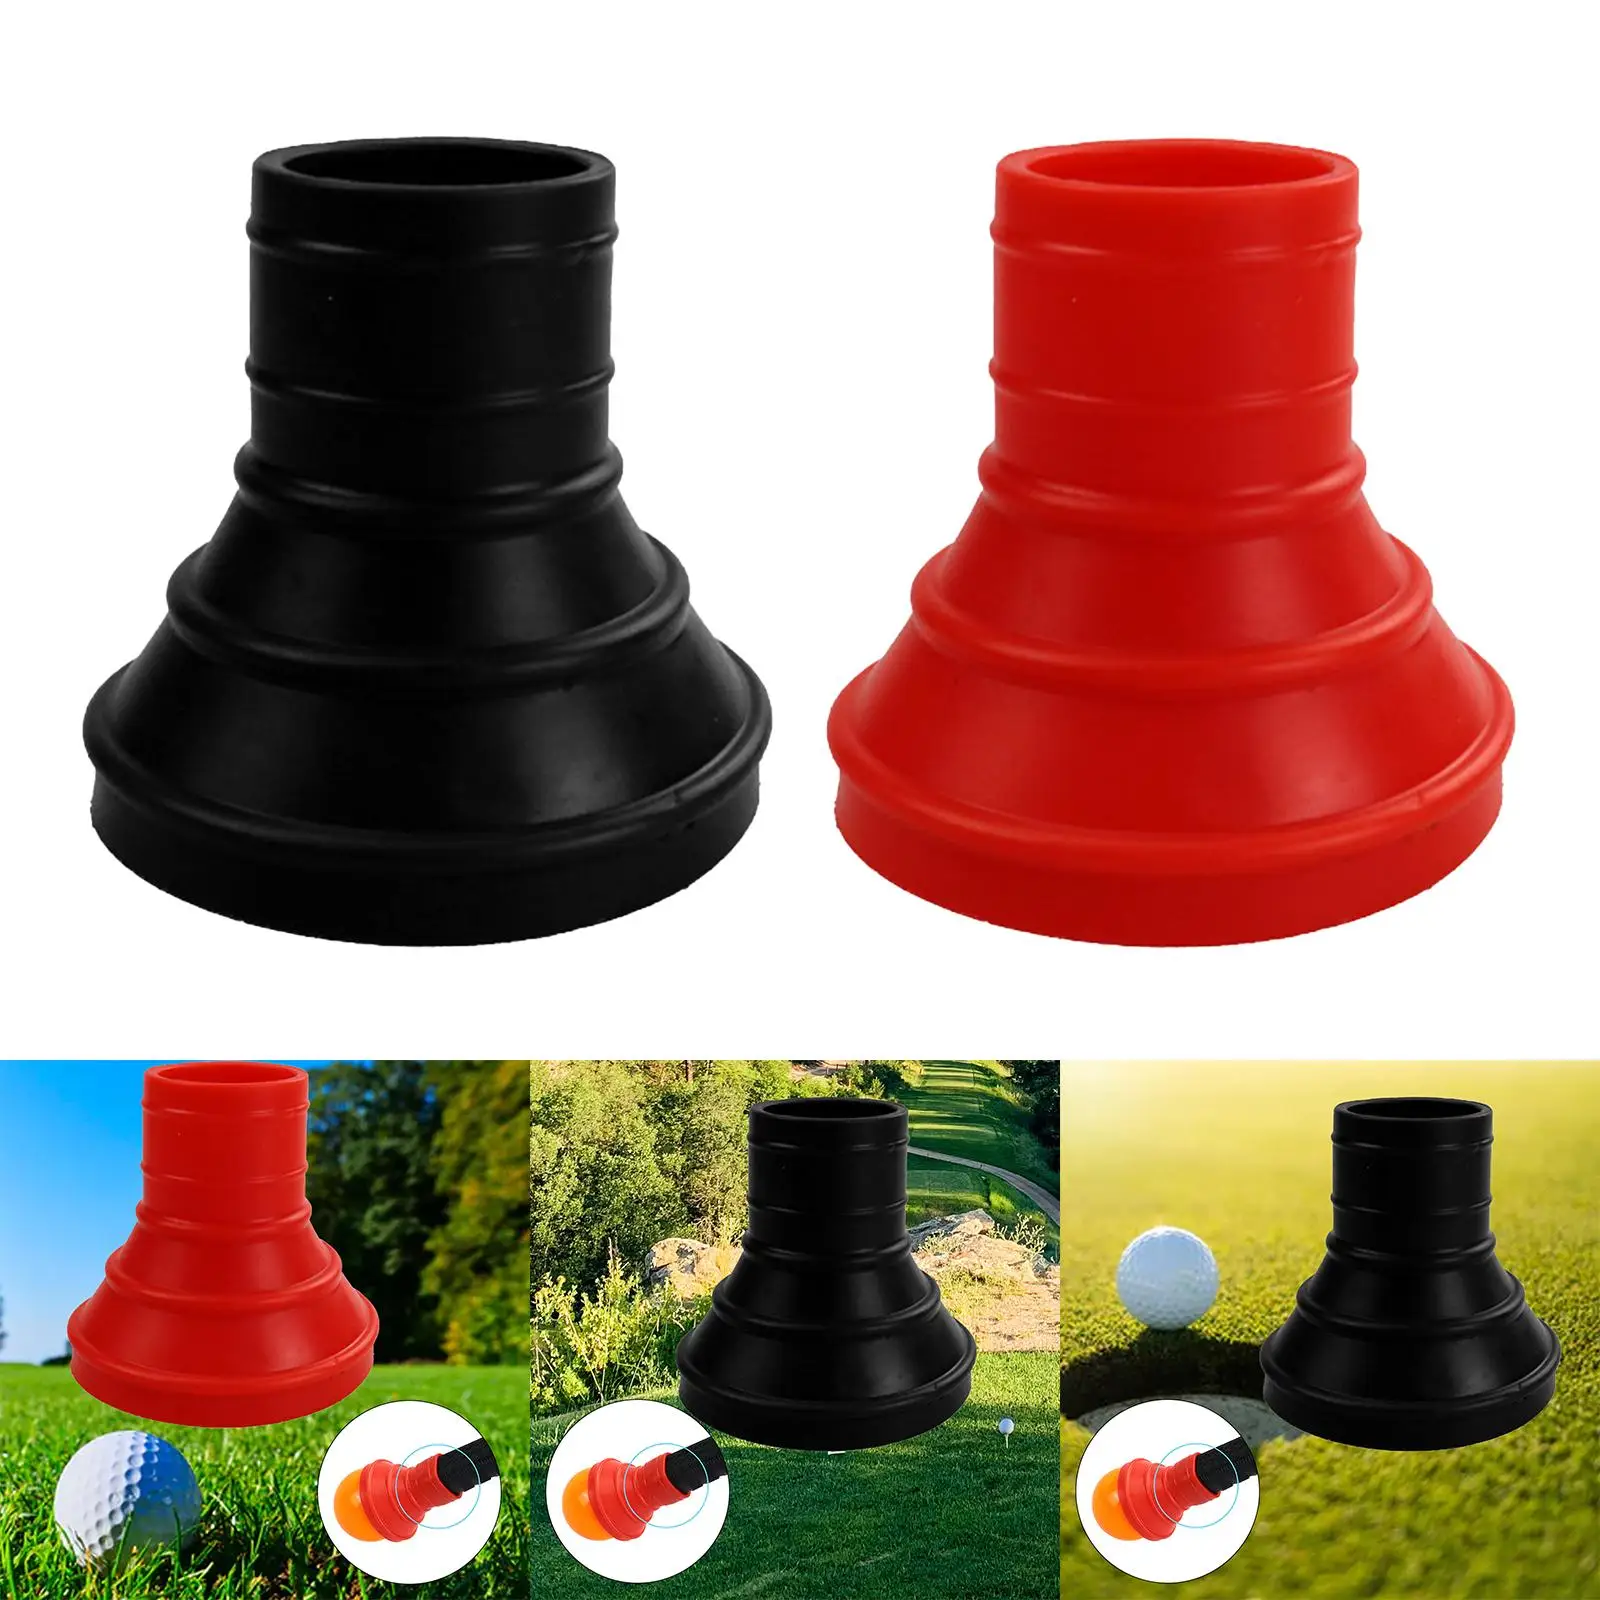 Park Golf Ball Pick up Durable Professional Rubber Grabber Saver Retriever  for Putter Grip Park Golf Accessory Golfer